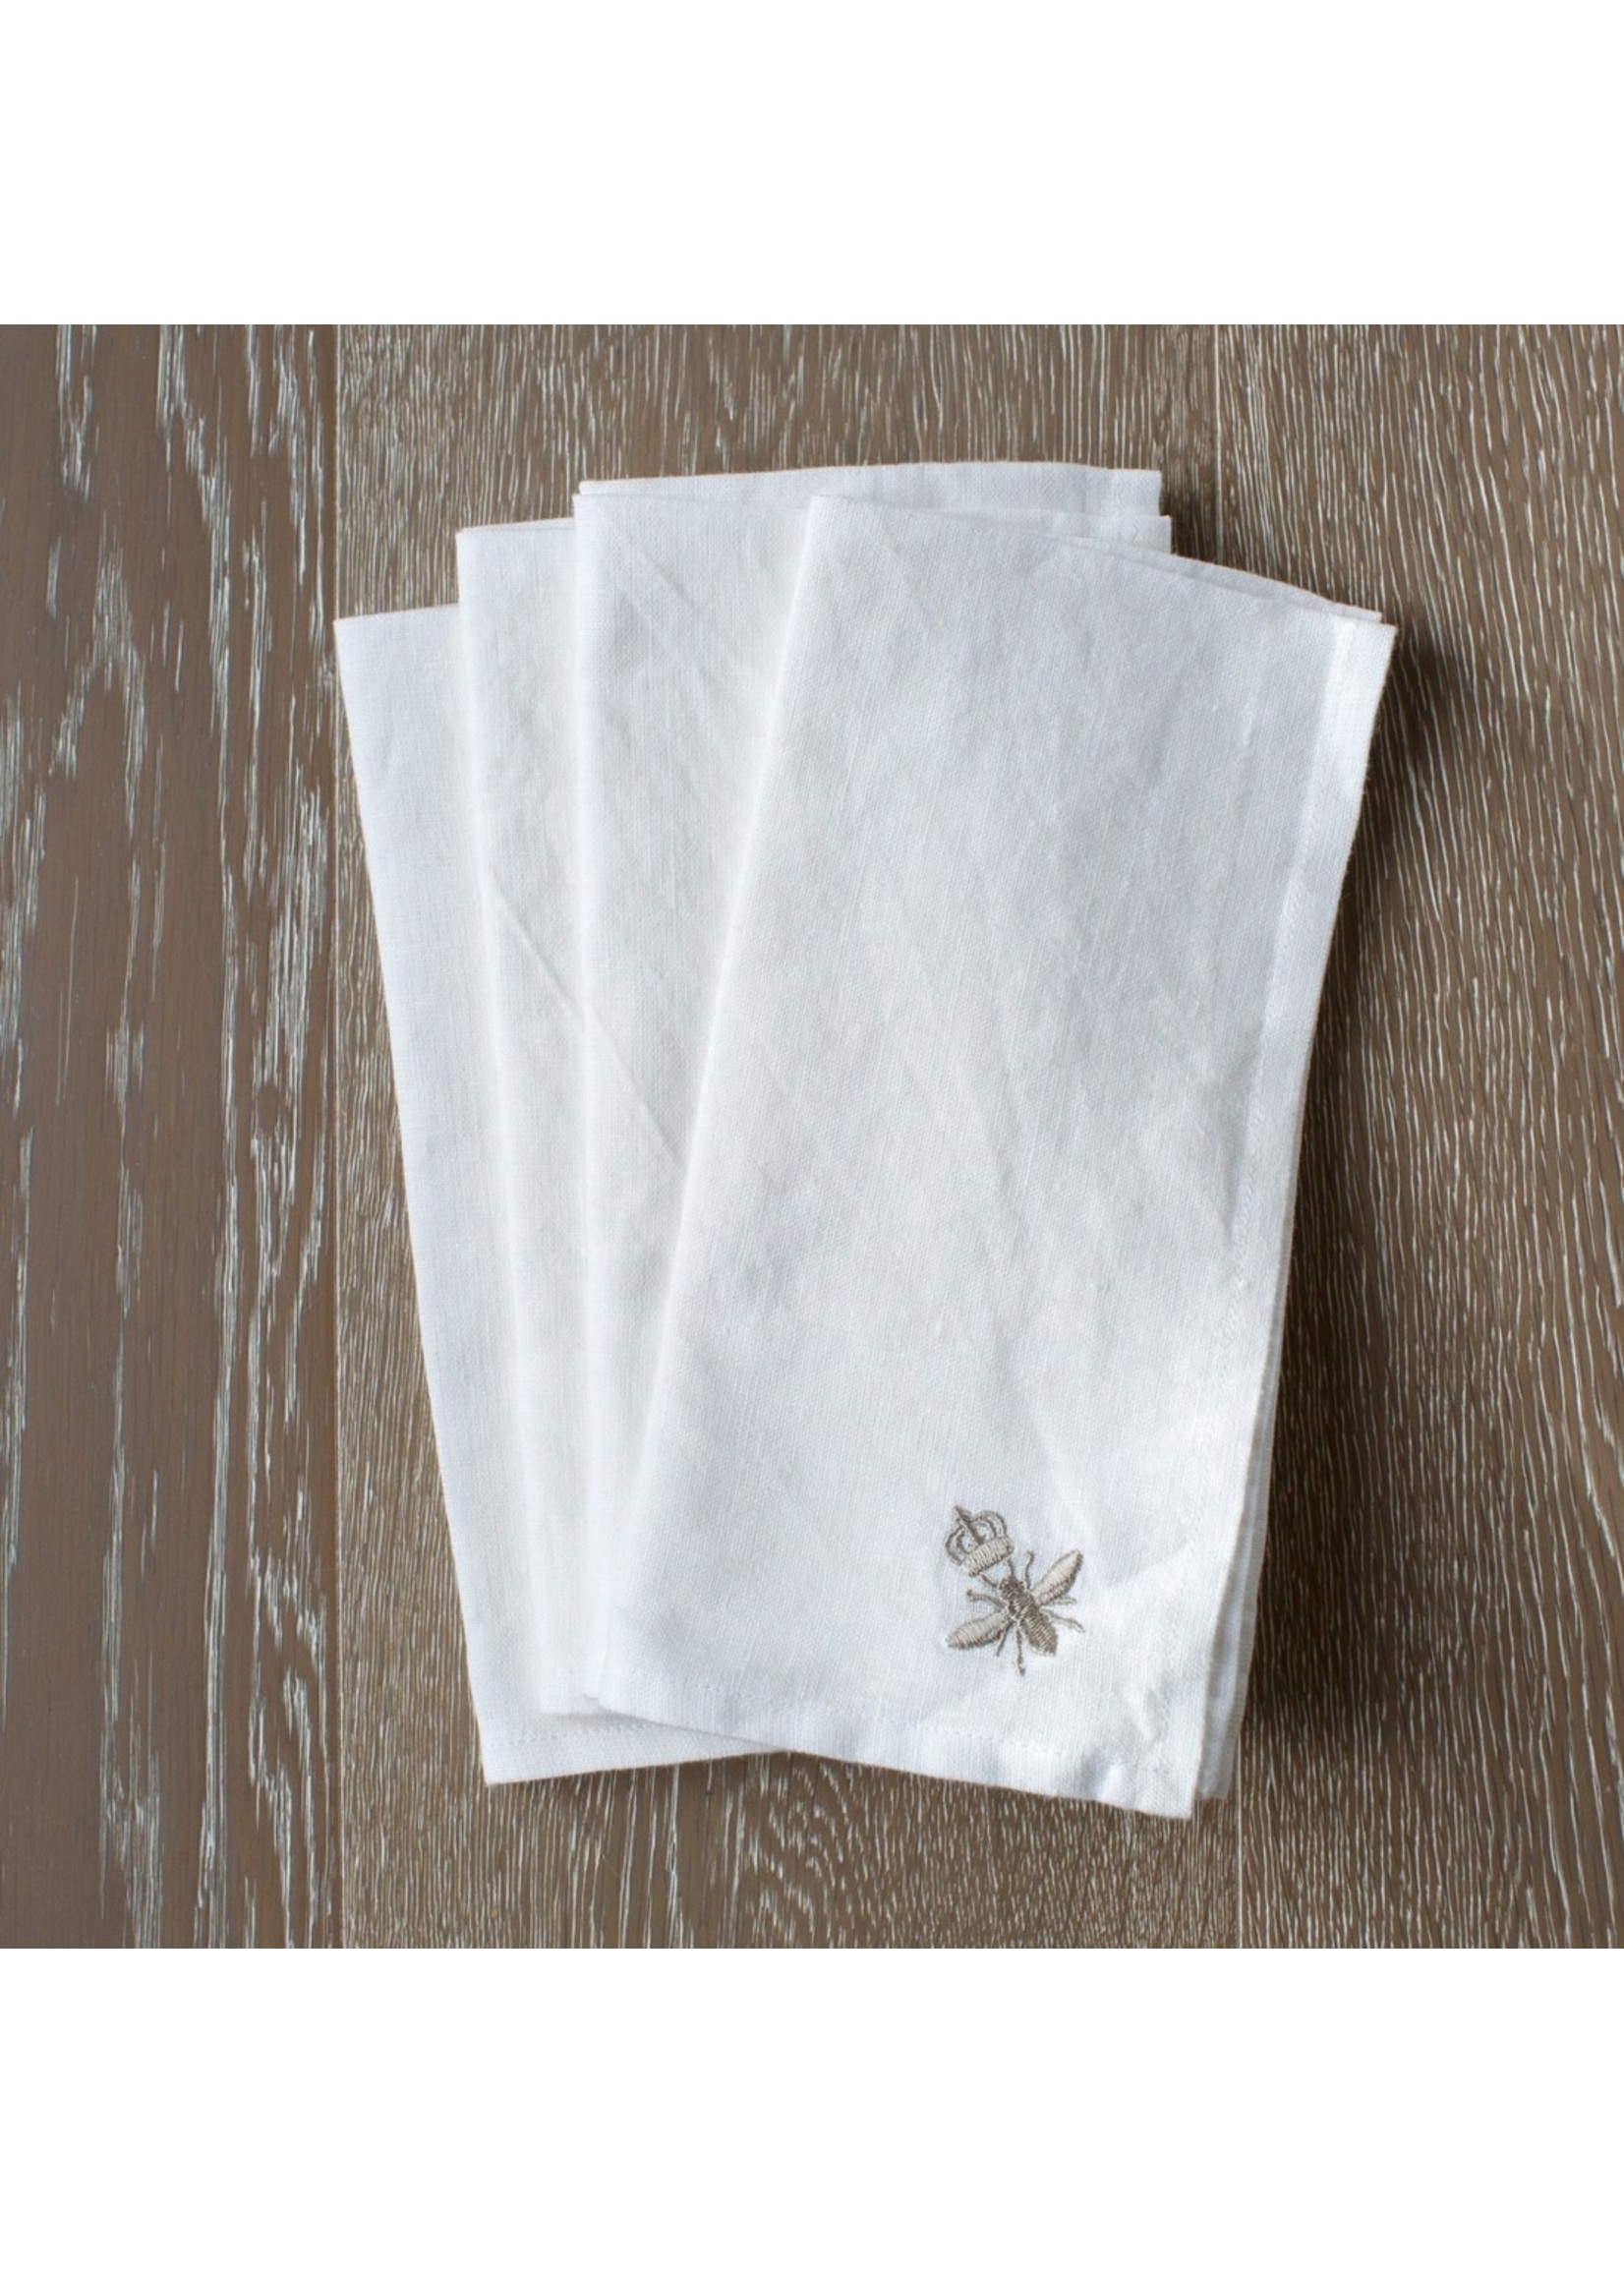 Crown Linen Washed Linen Napkins - Royal Bee (set of 4)